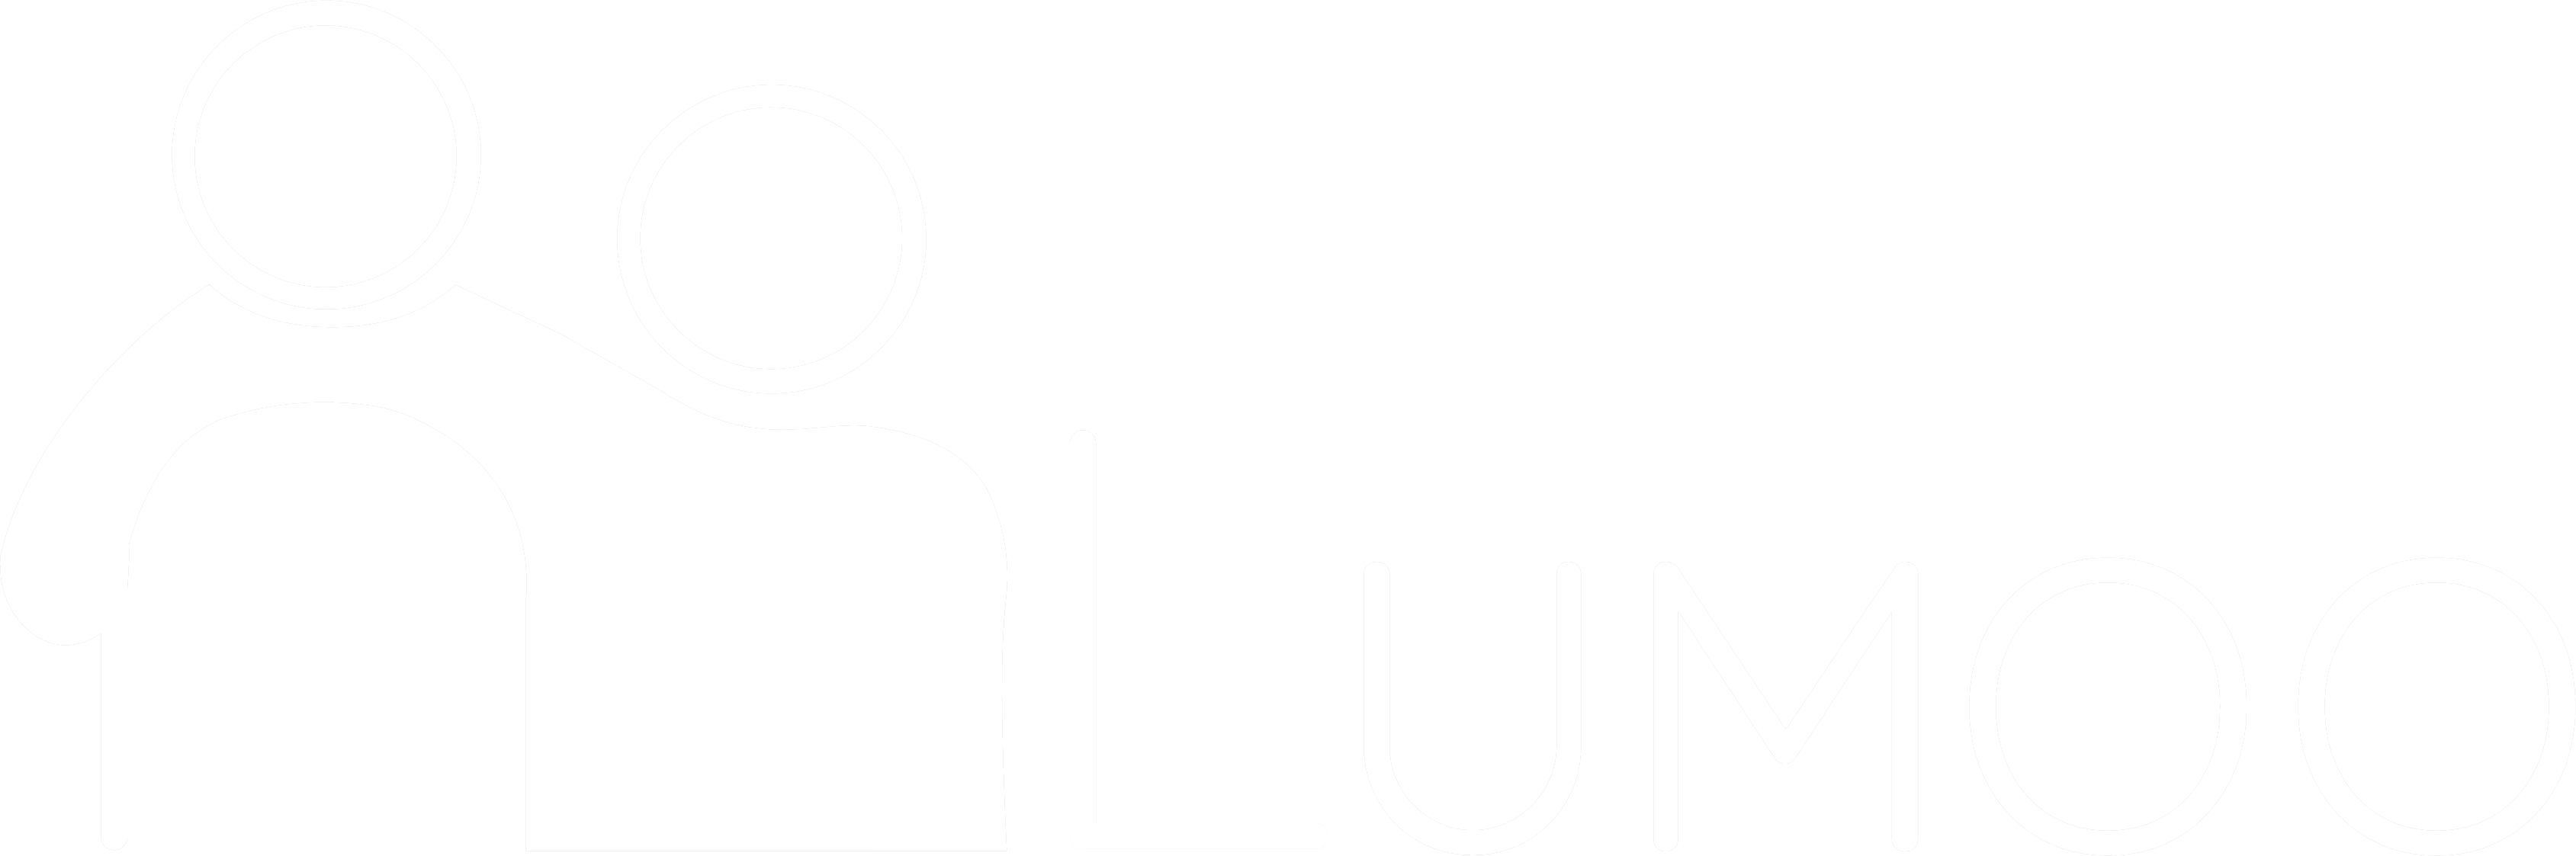 Lumoo Logo